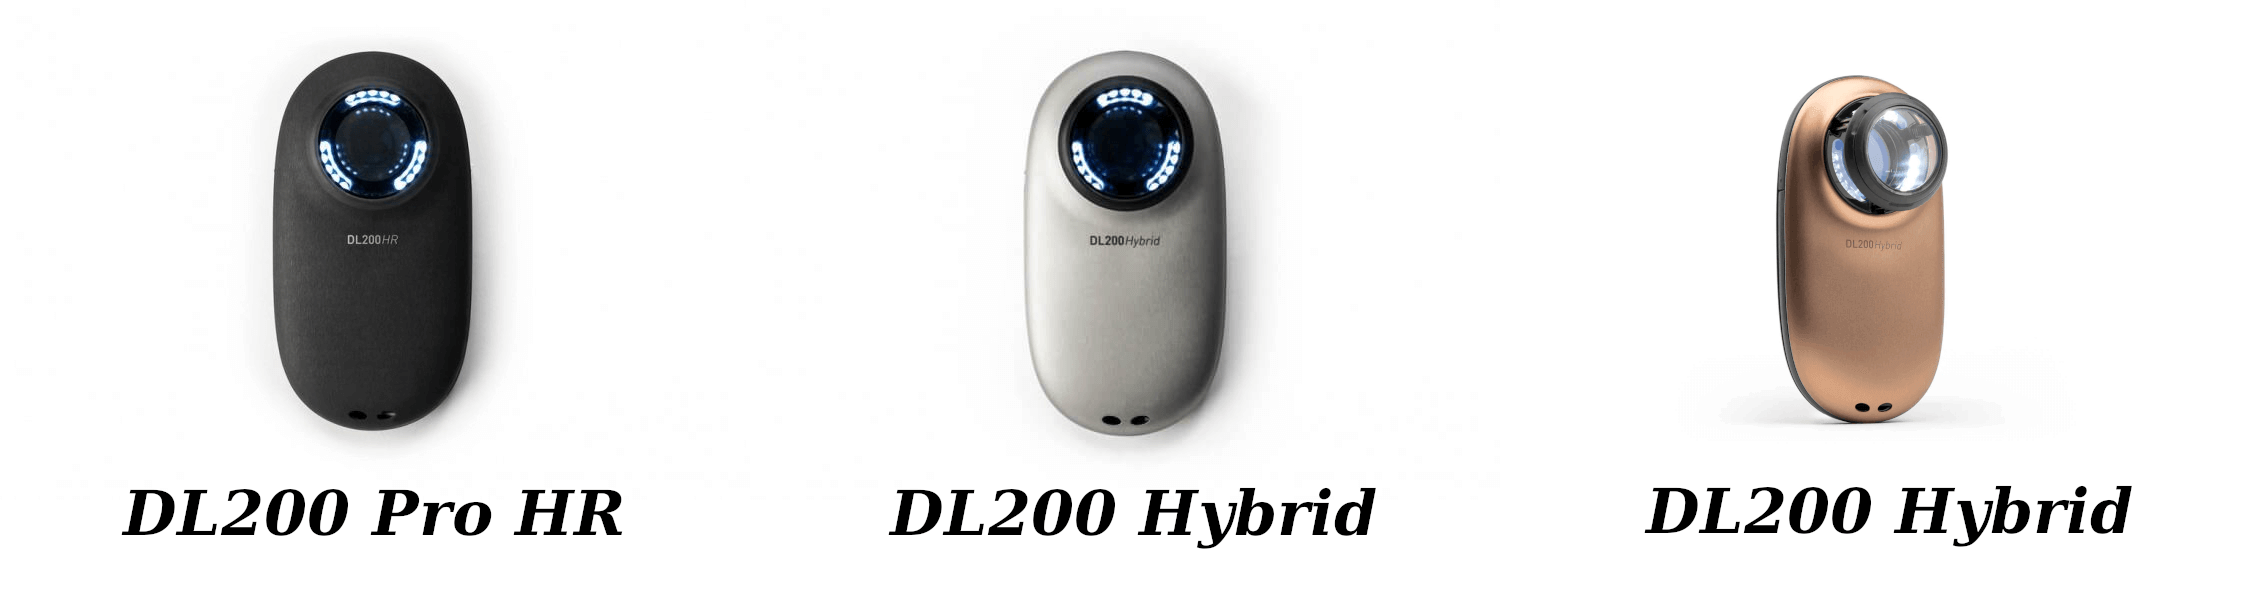 DL200 modelos Pro HR - Hybrid - Gold